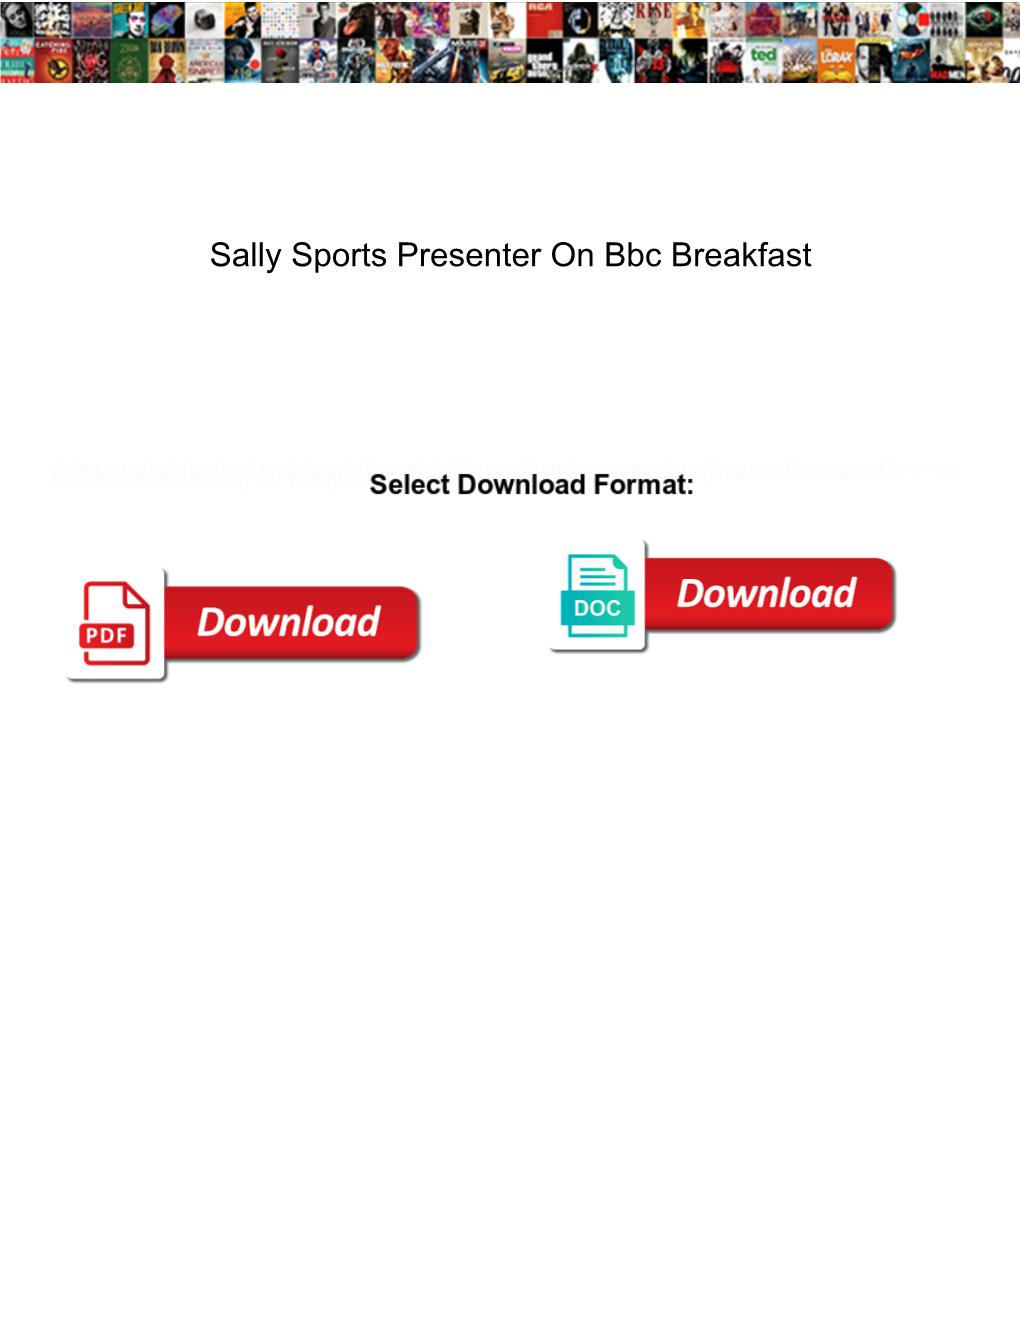 Sally Sports Presenter on Bbc Breakfast